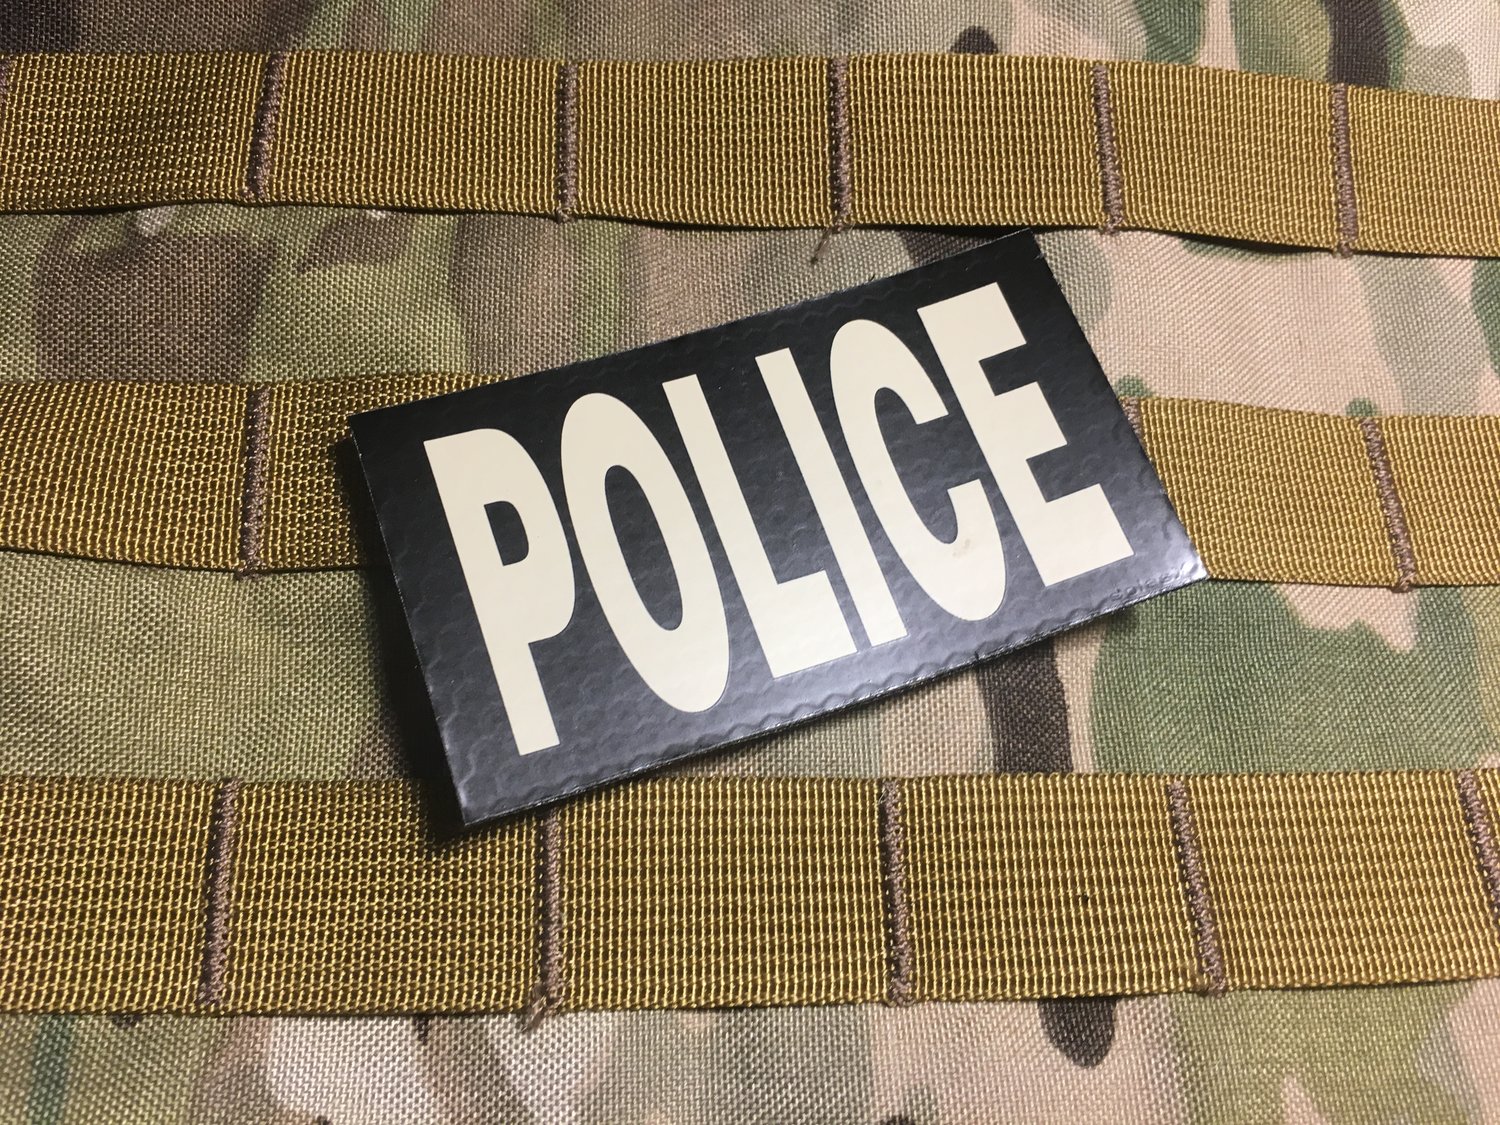 IR Patch Sheriff Reflective Markers 3x5 - MOD Armory